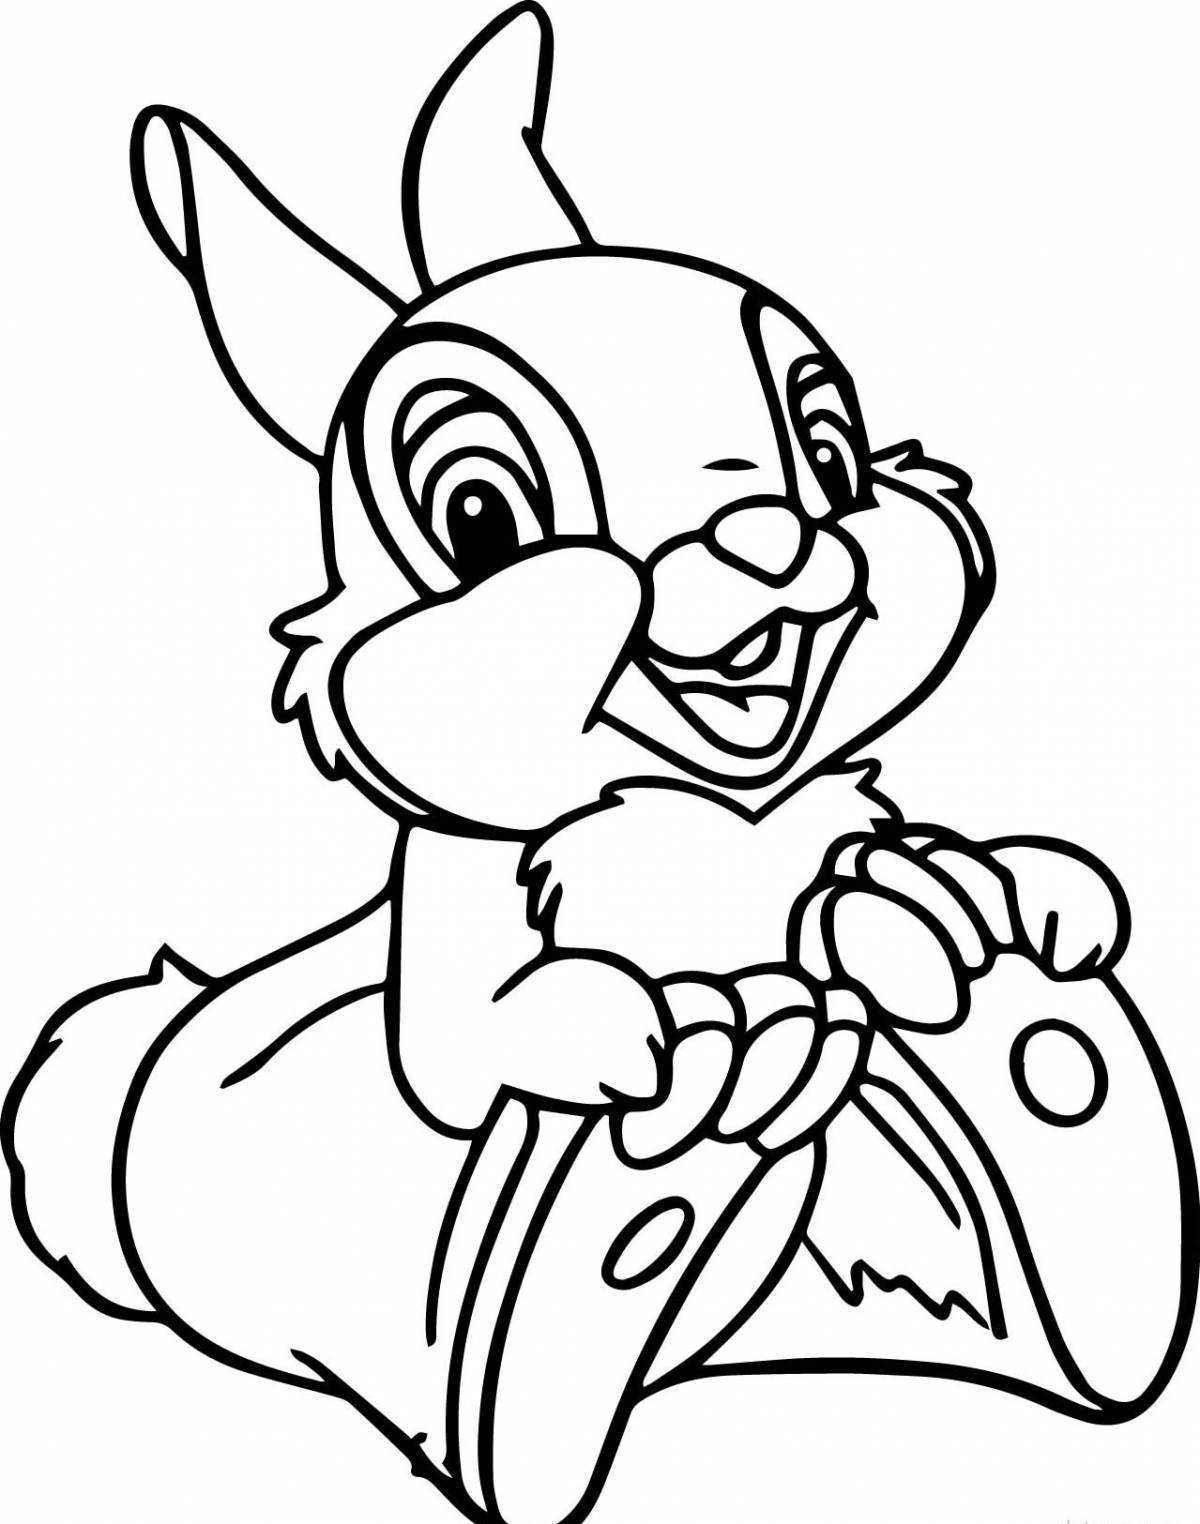 Coloring book bright cartoon hare